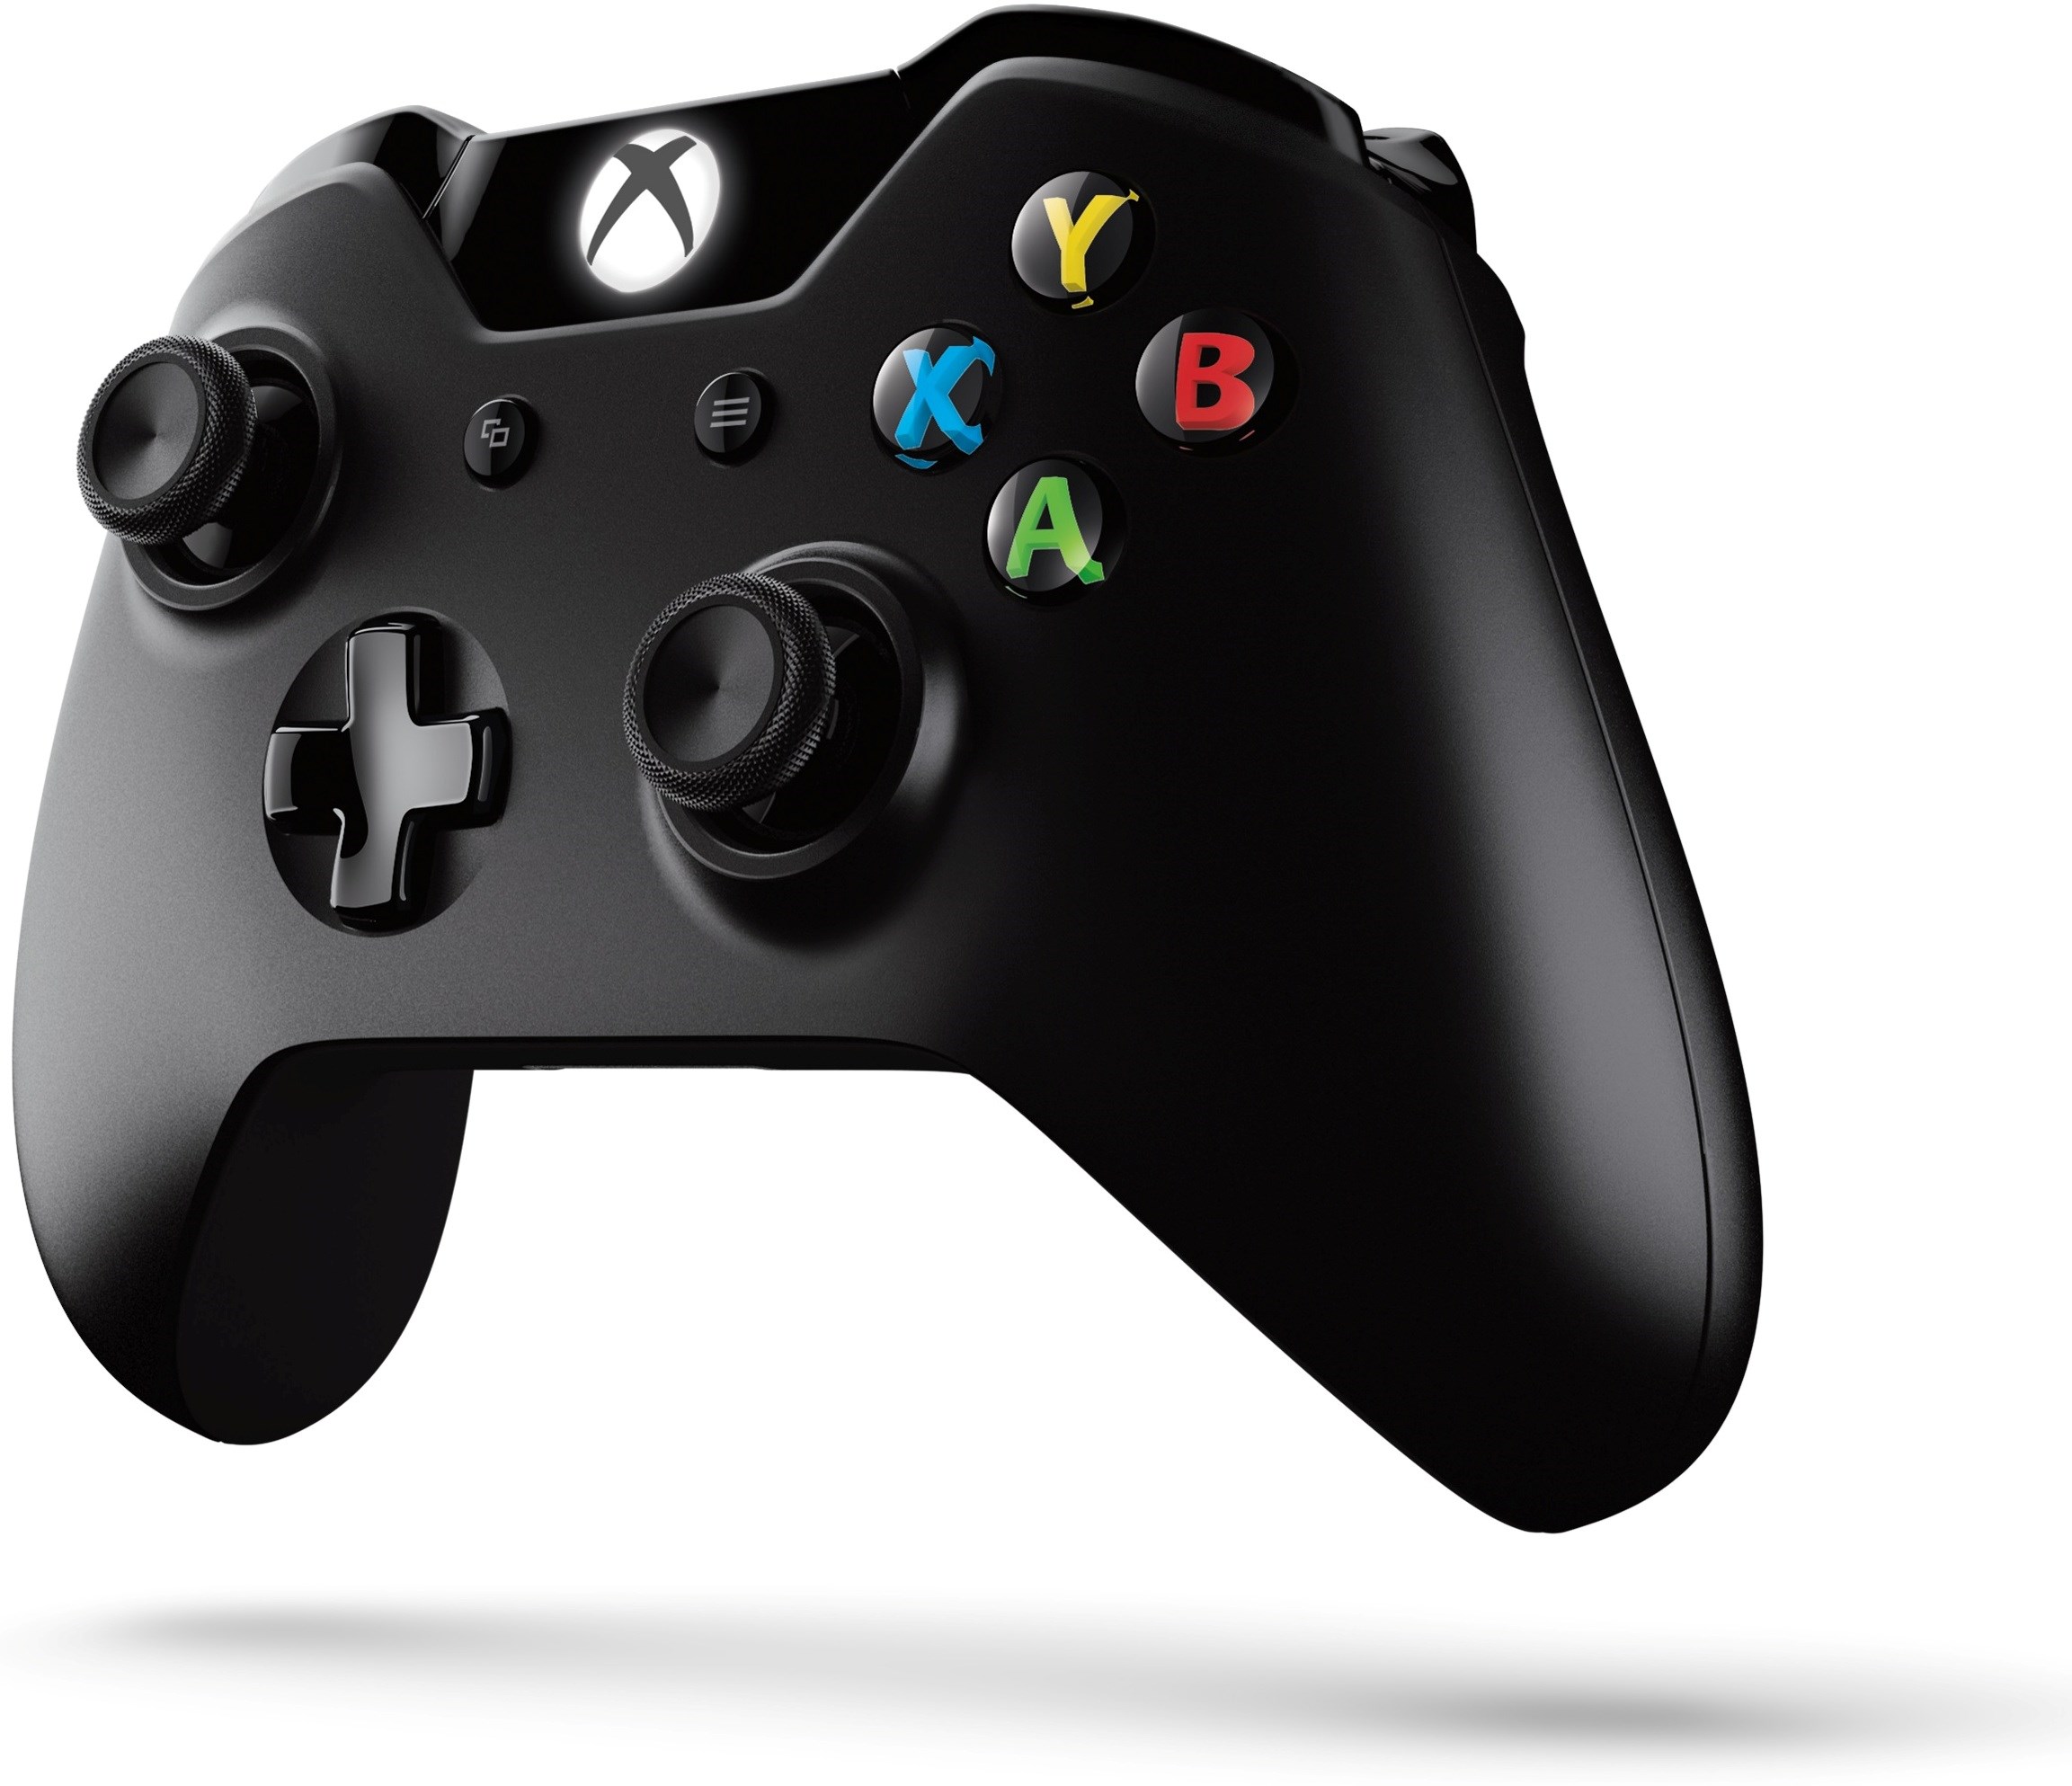  Microsoft Xbox One + Assassins Creed Assassins Creed Unity + IV Black Flag 